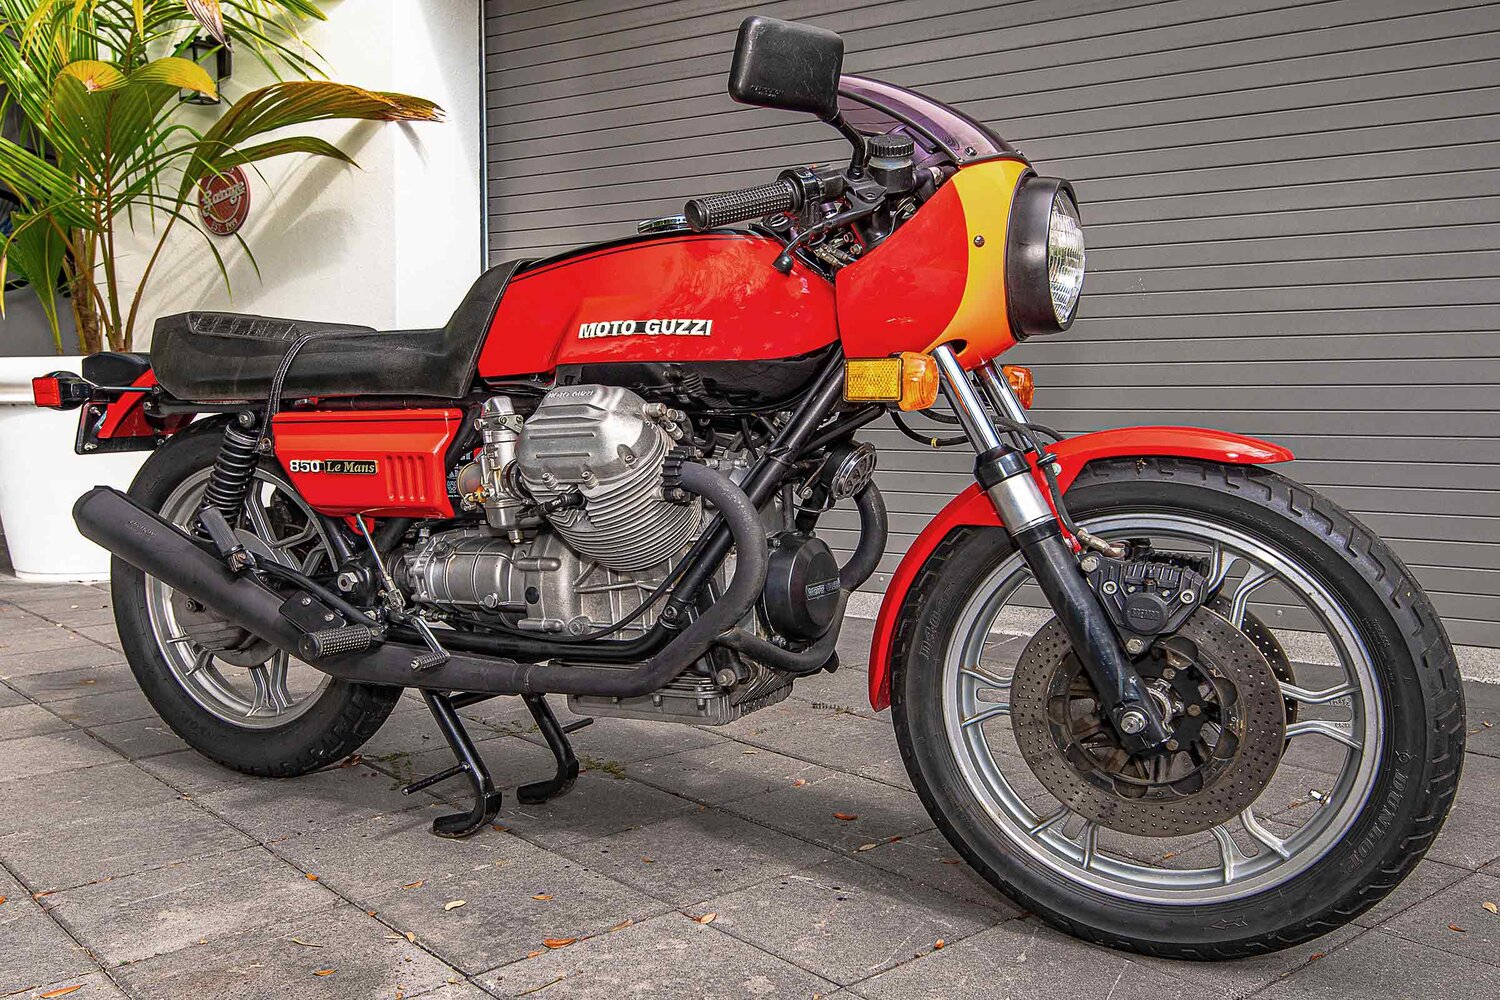 Moto Guzzi Trotter VIP 50 cc 1967-69 ciclomotor ciclomotor ciclomotor rojo red 1:18 Atlas